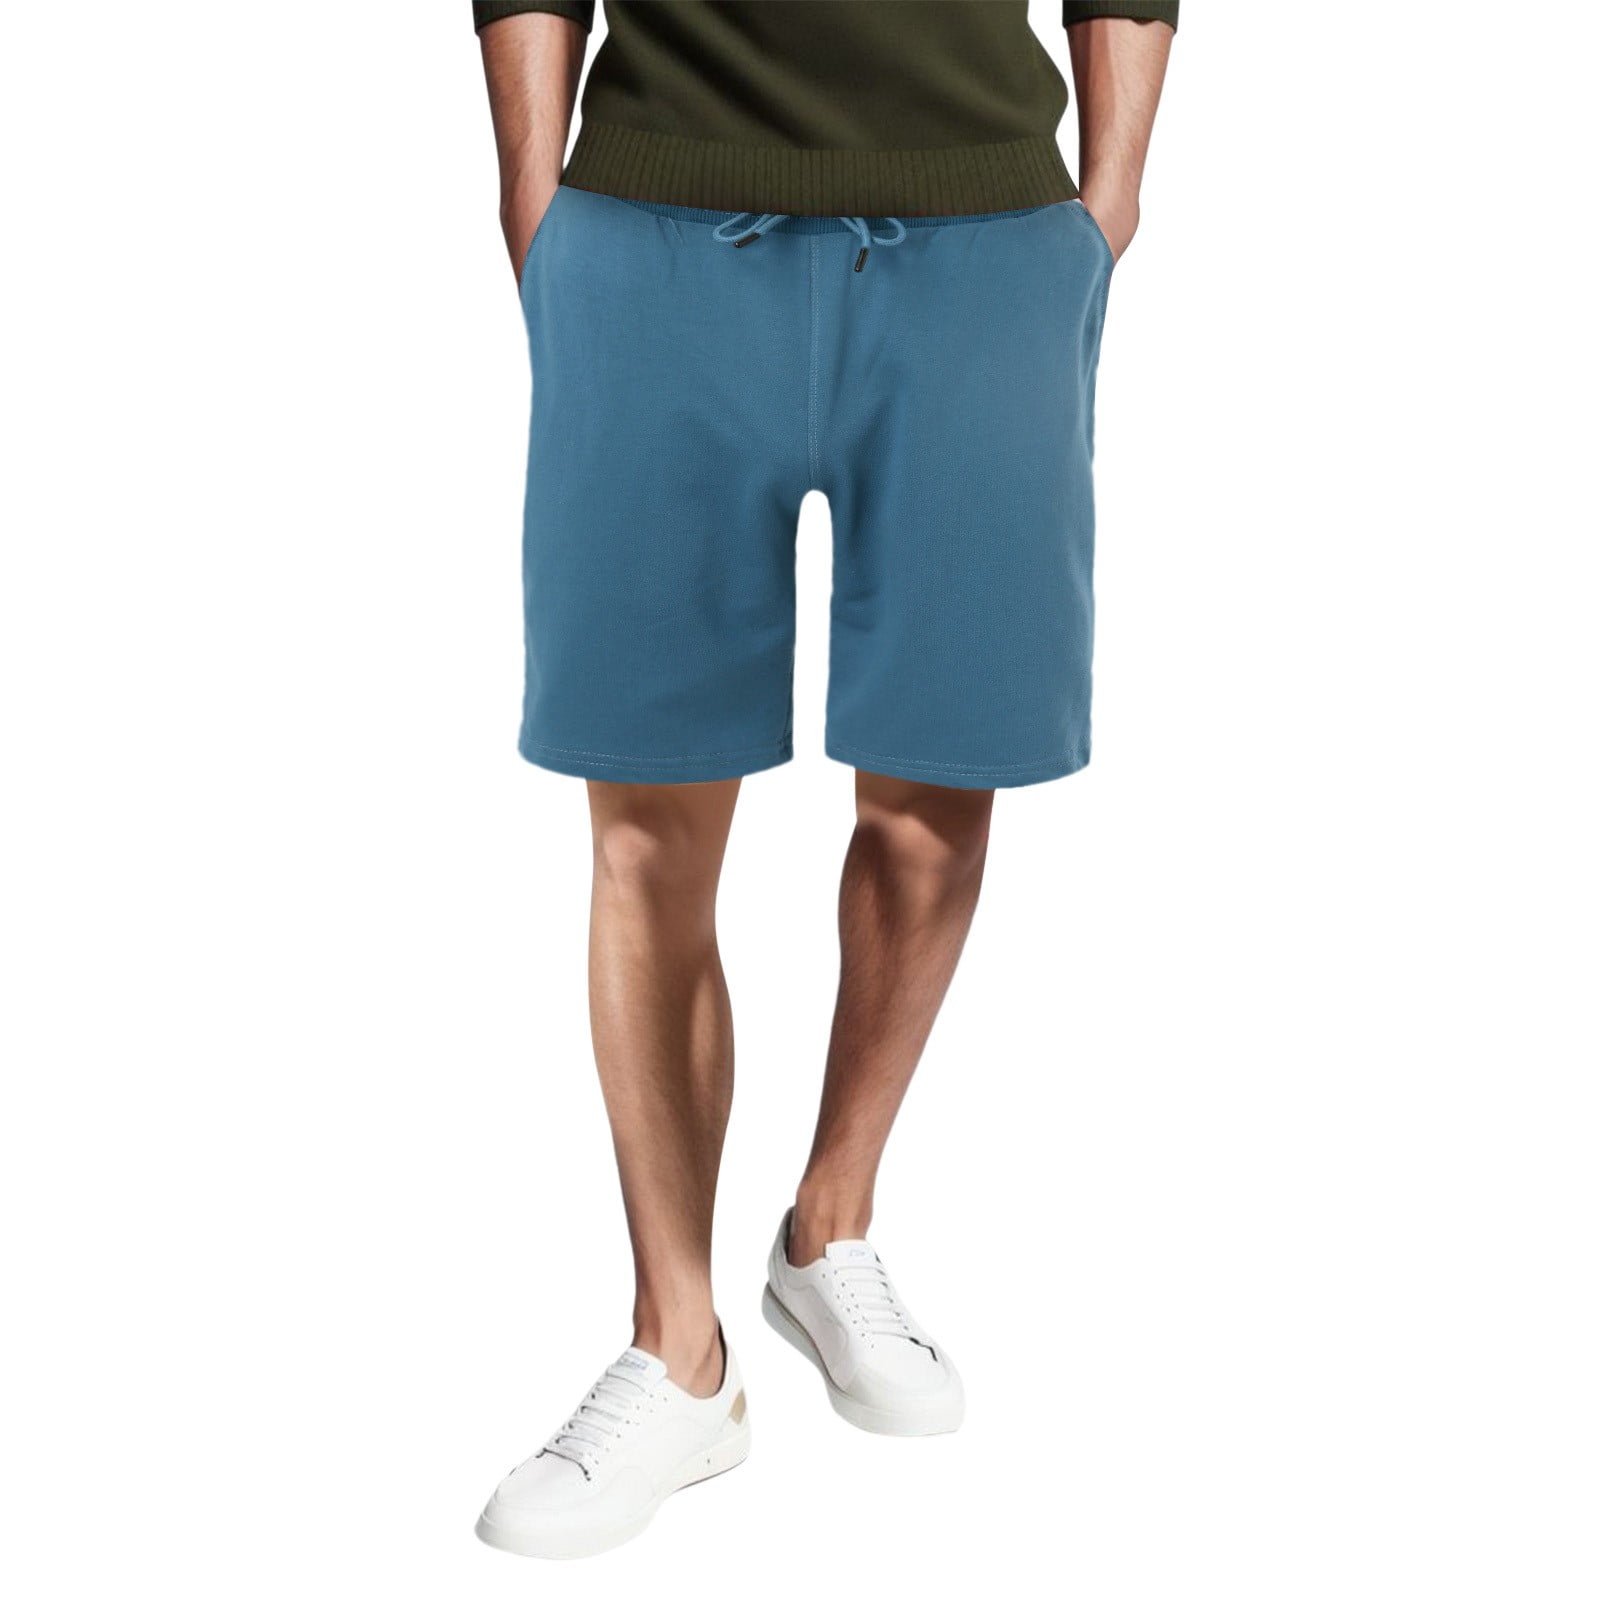 AdBFJAF Pants for Men Sweatpants Summer Trend Sports Loose Shorts Men's ...